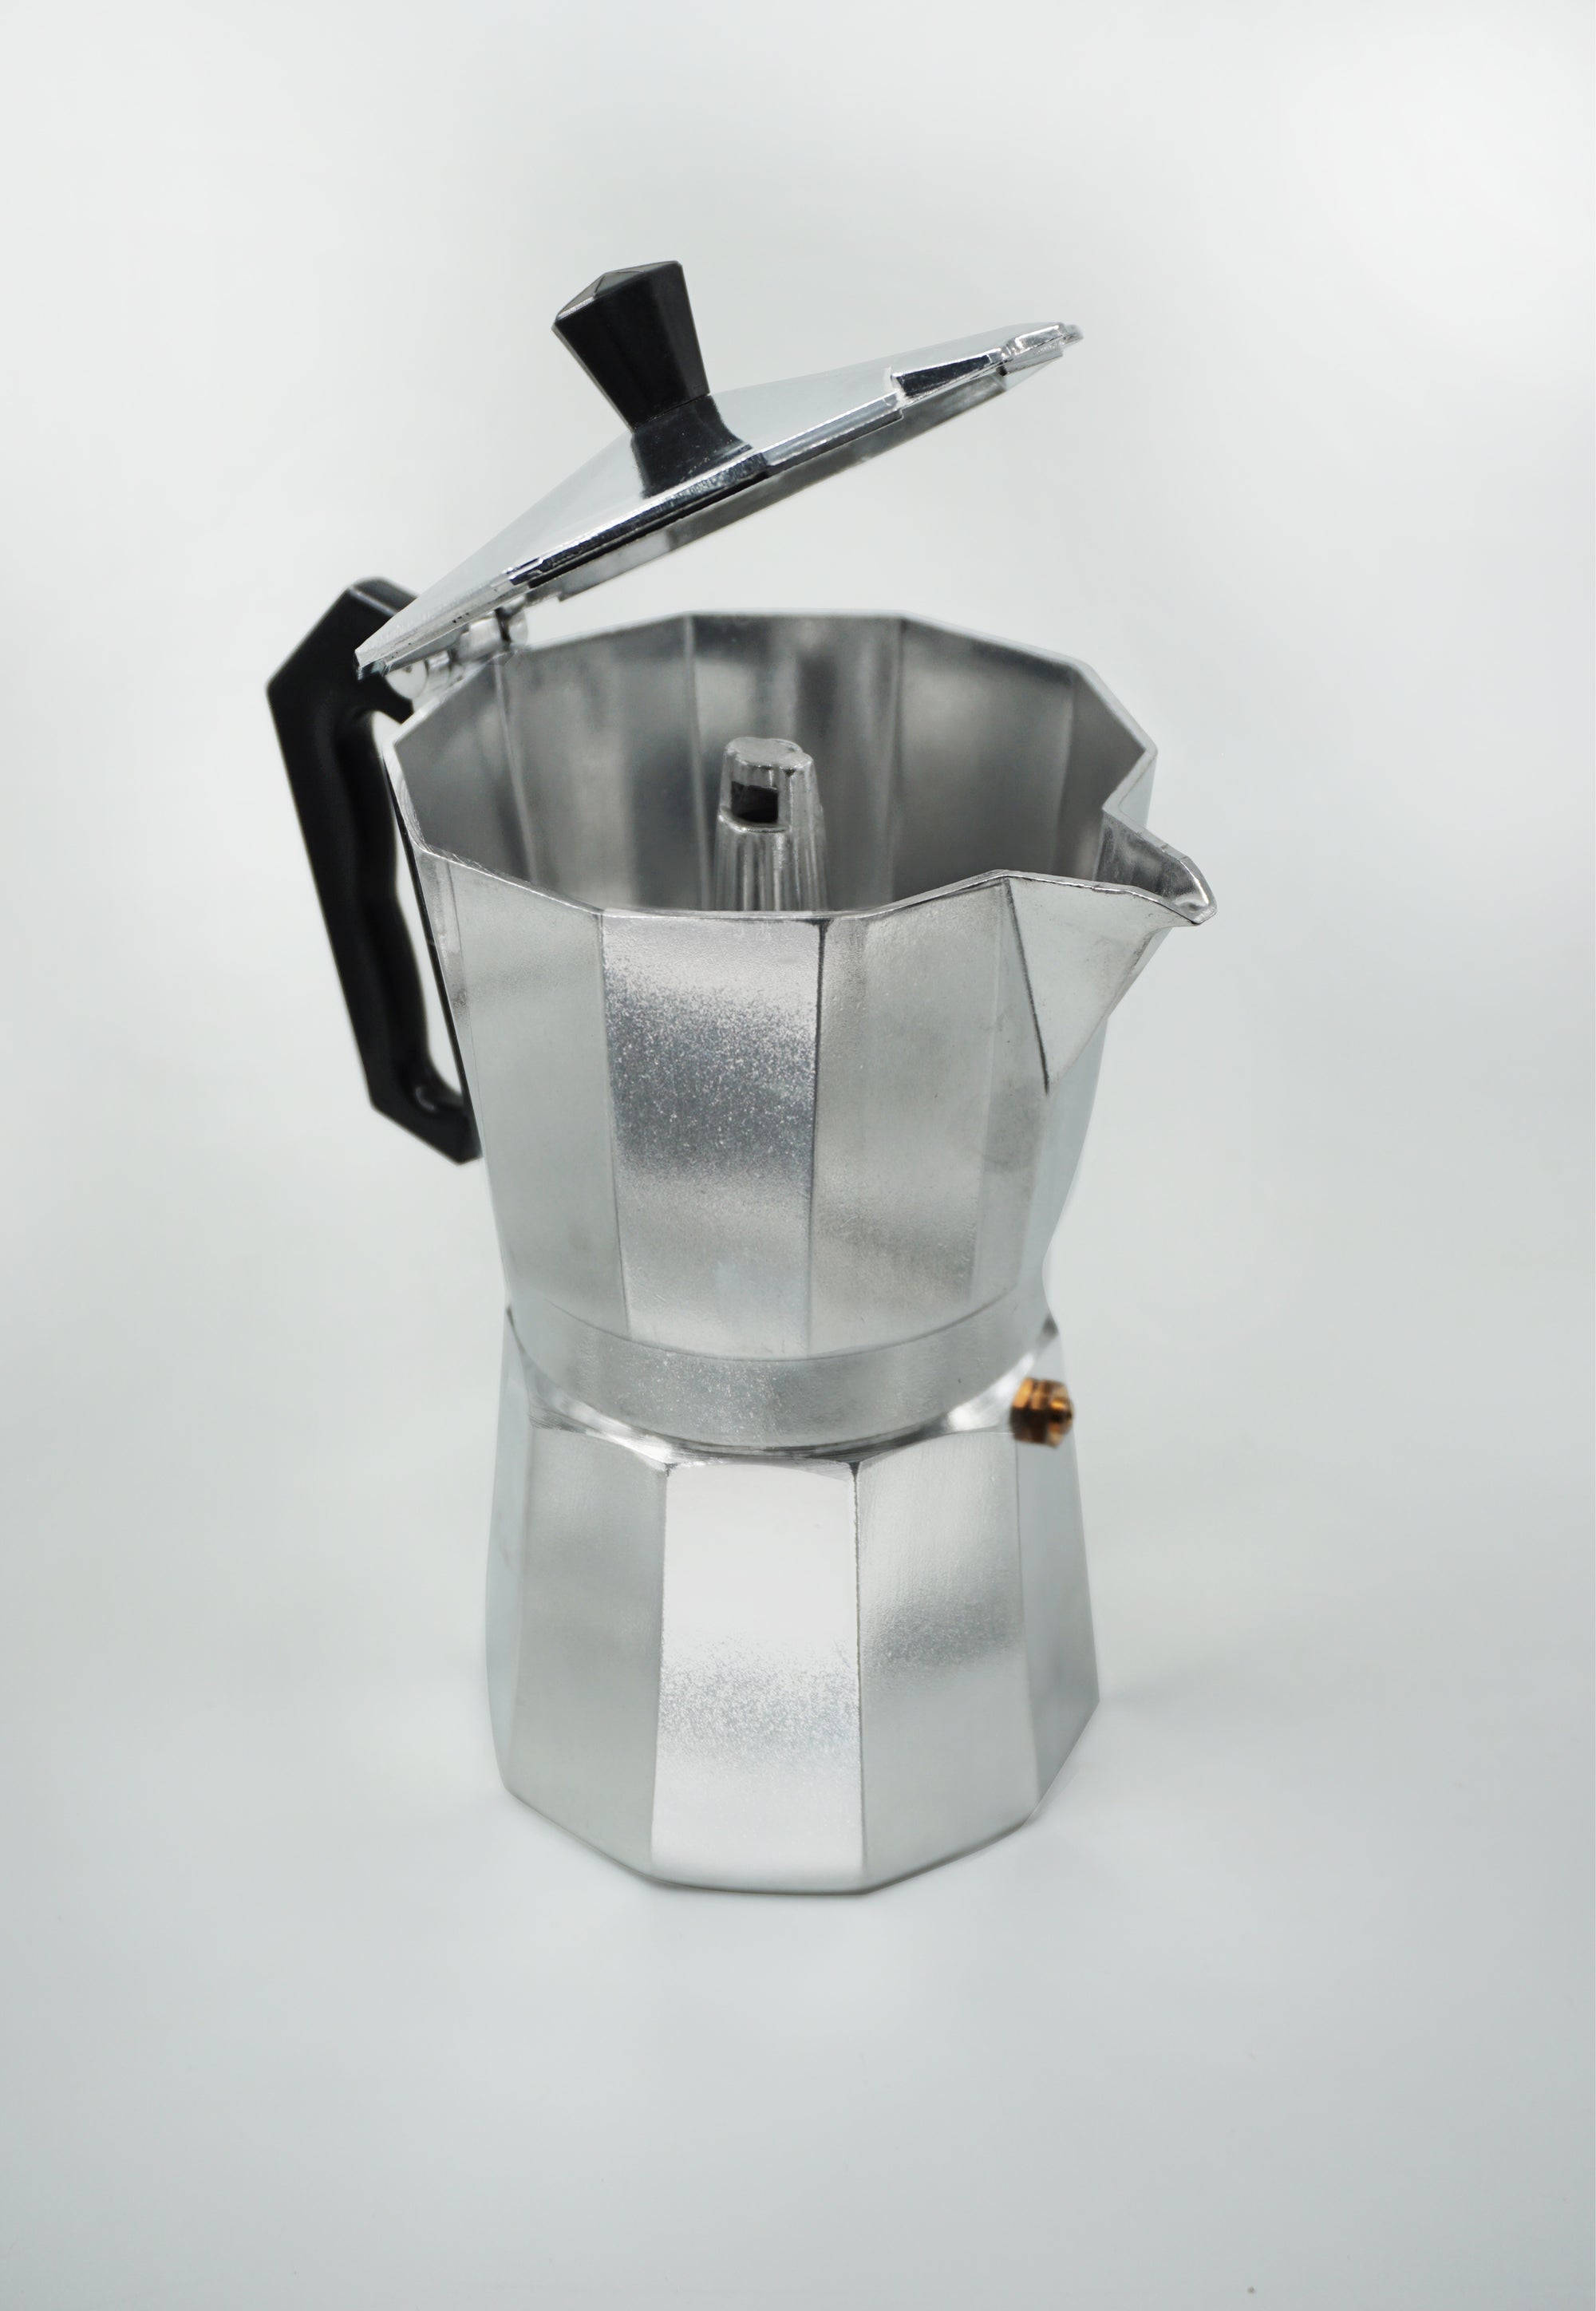 300ml Moka Pot: Authentic Stovetop Coffee Maker